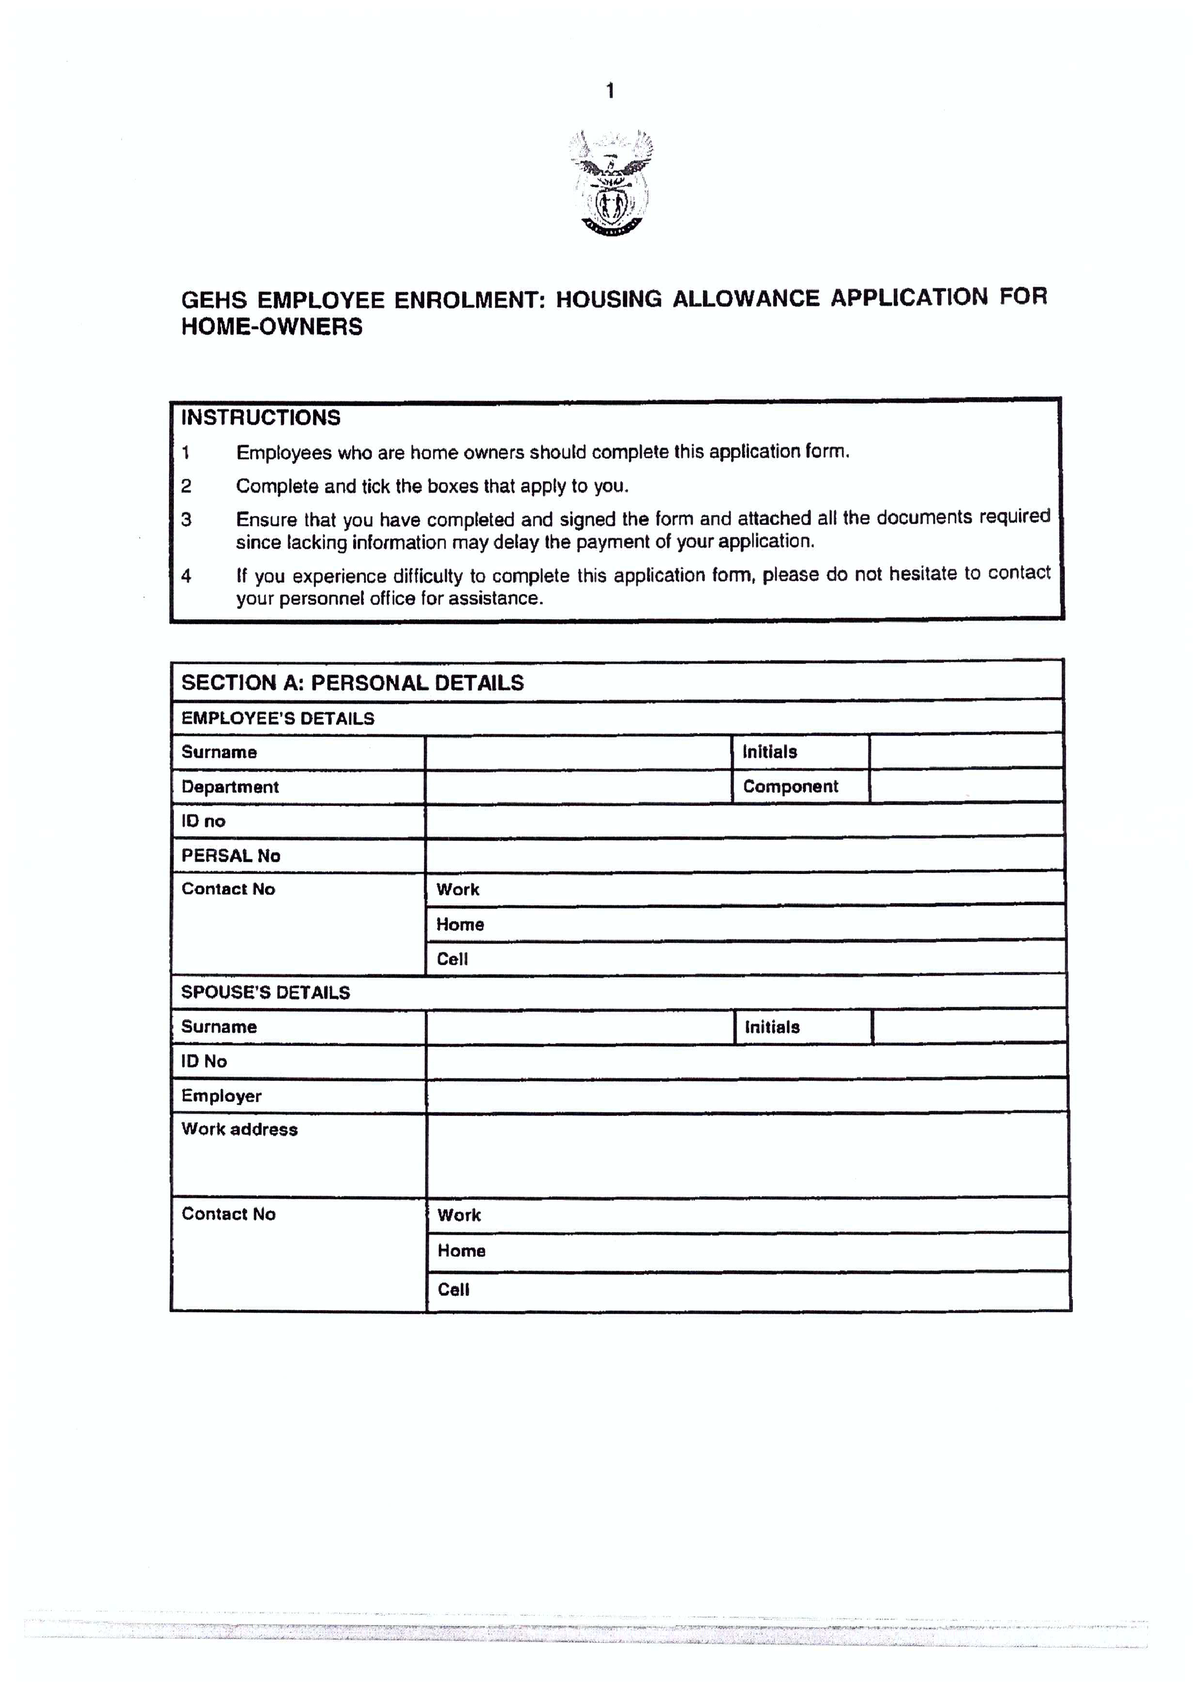 housing-allowance-form-for-homeowners-hrm2601-studocu